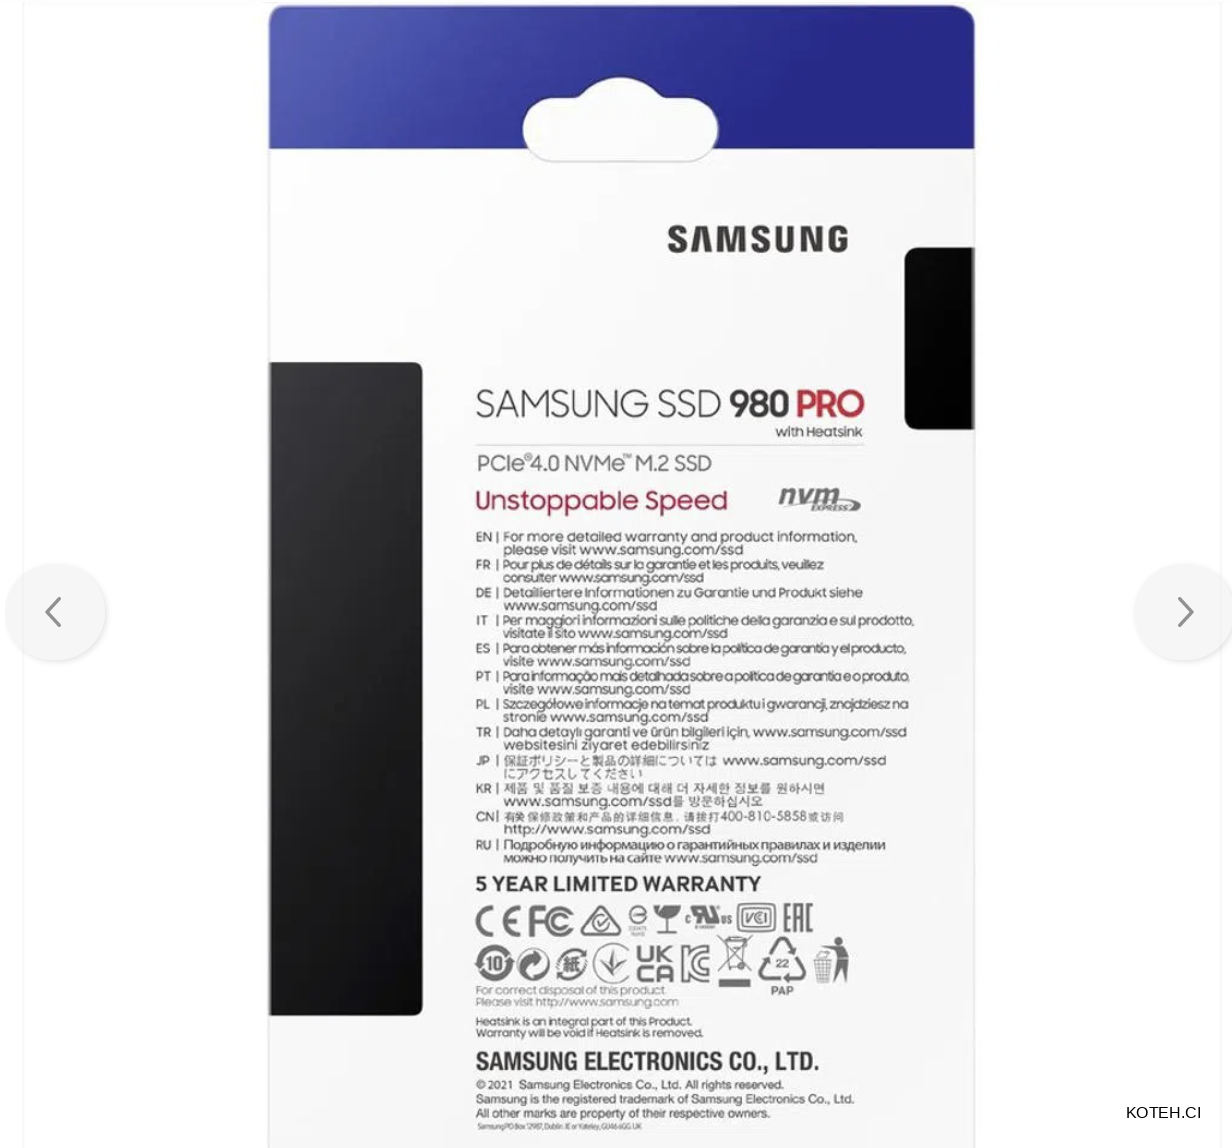 SSD M.2 1000Go EVO 980 Samsung